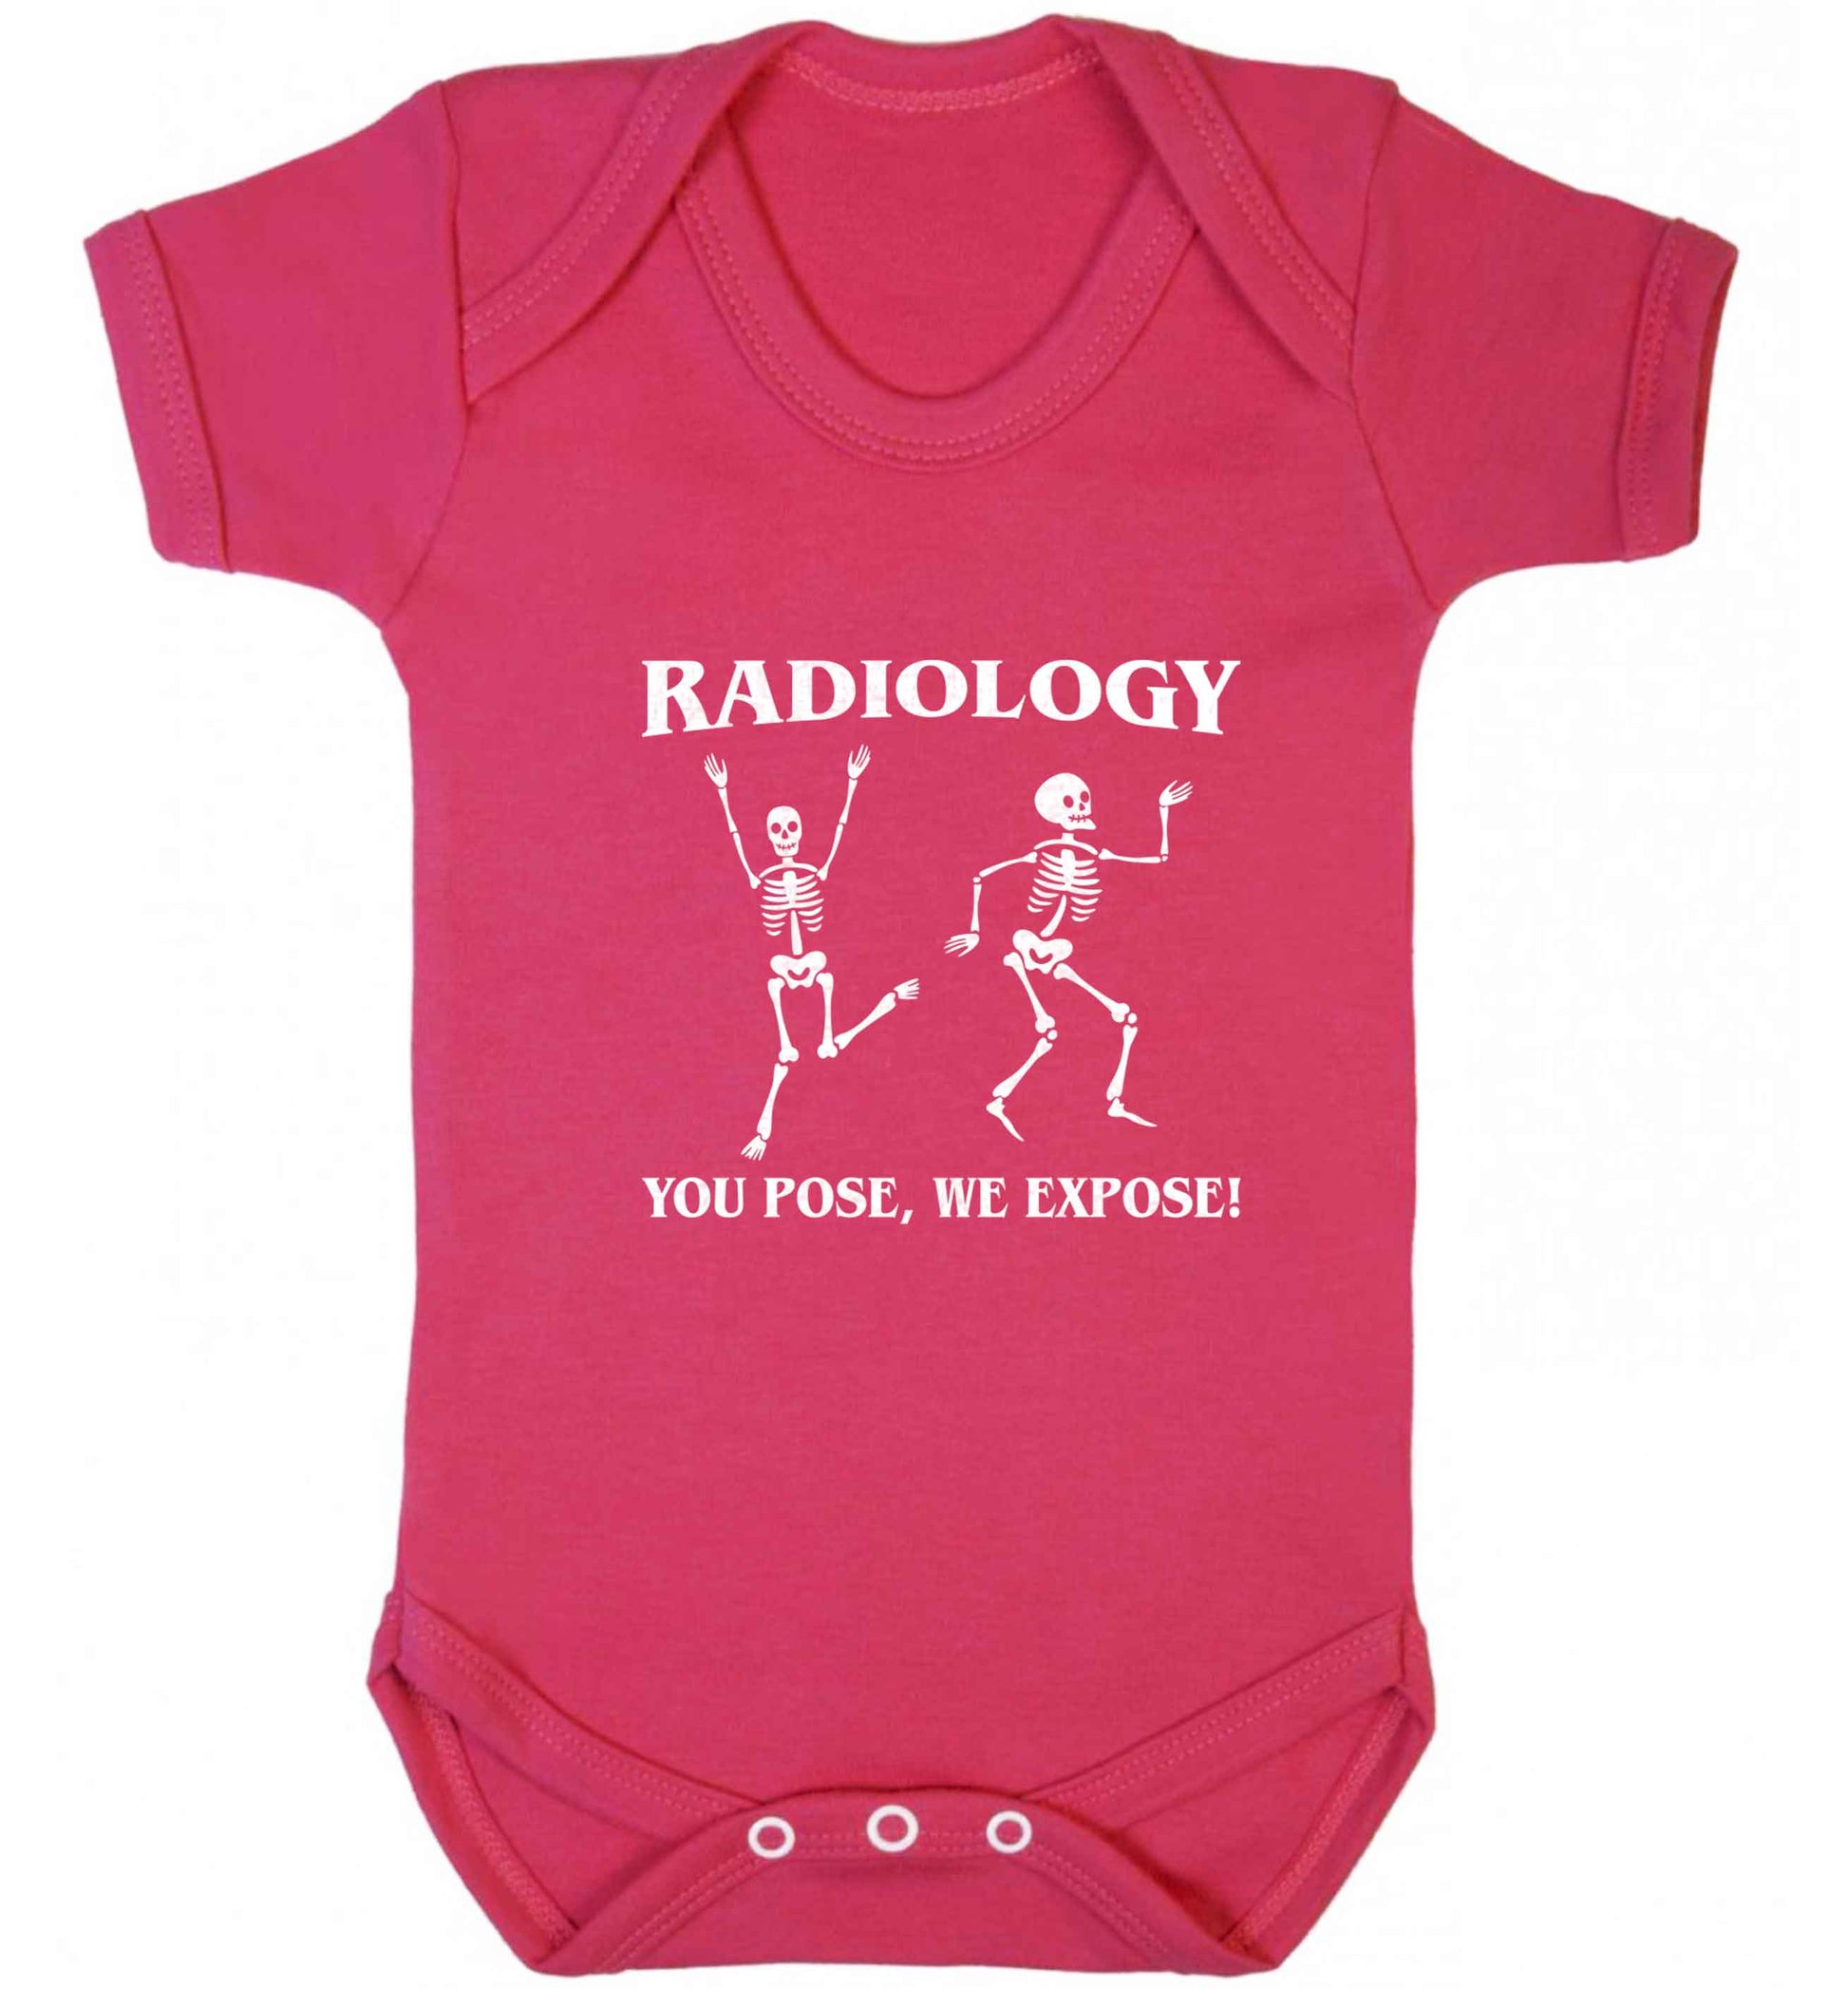 Radiology you pose we expose baby vest dark pink 18-24 months